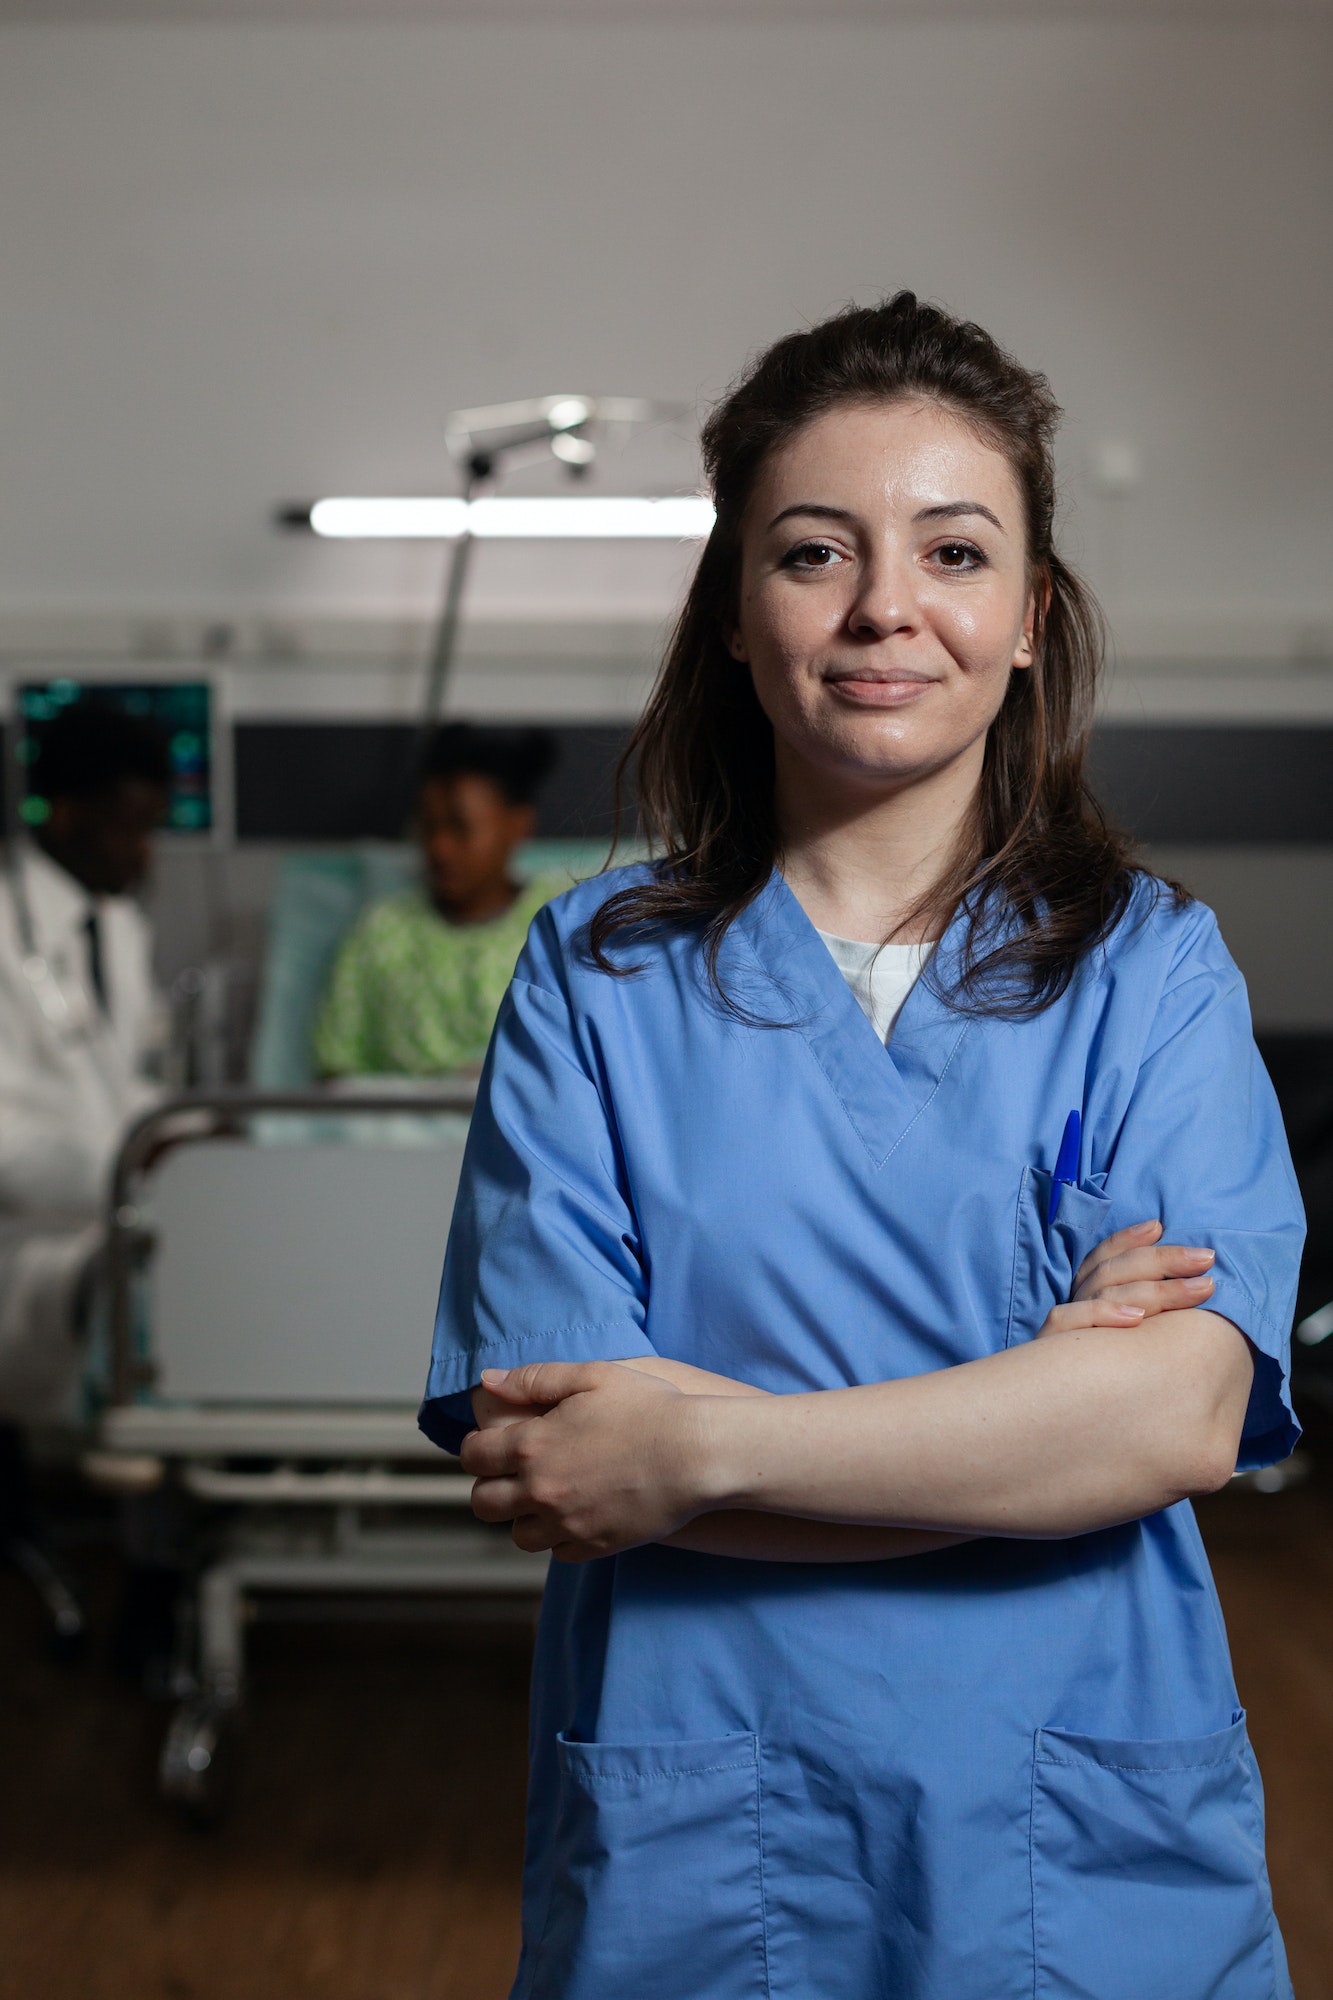 Portrait of specialist therapist nurse standing in hospital ward